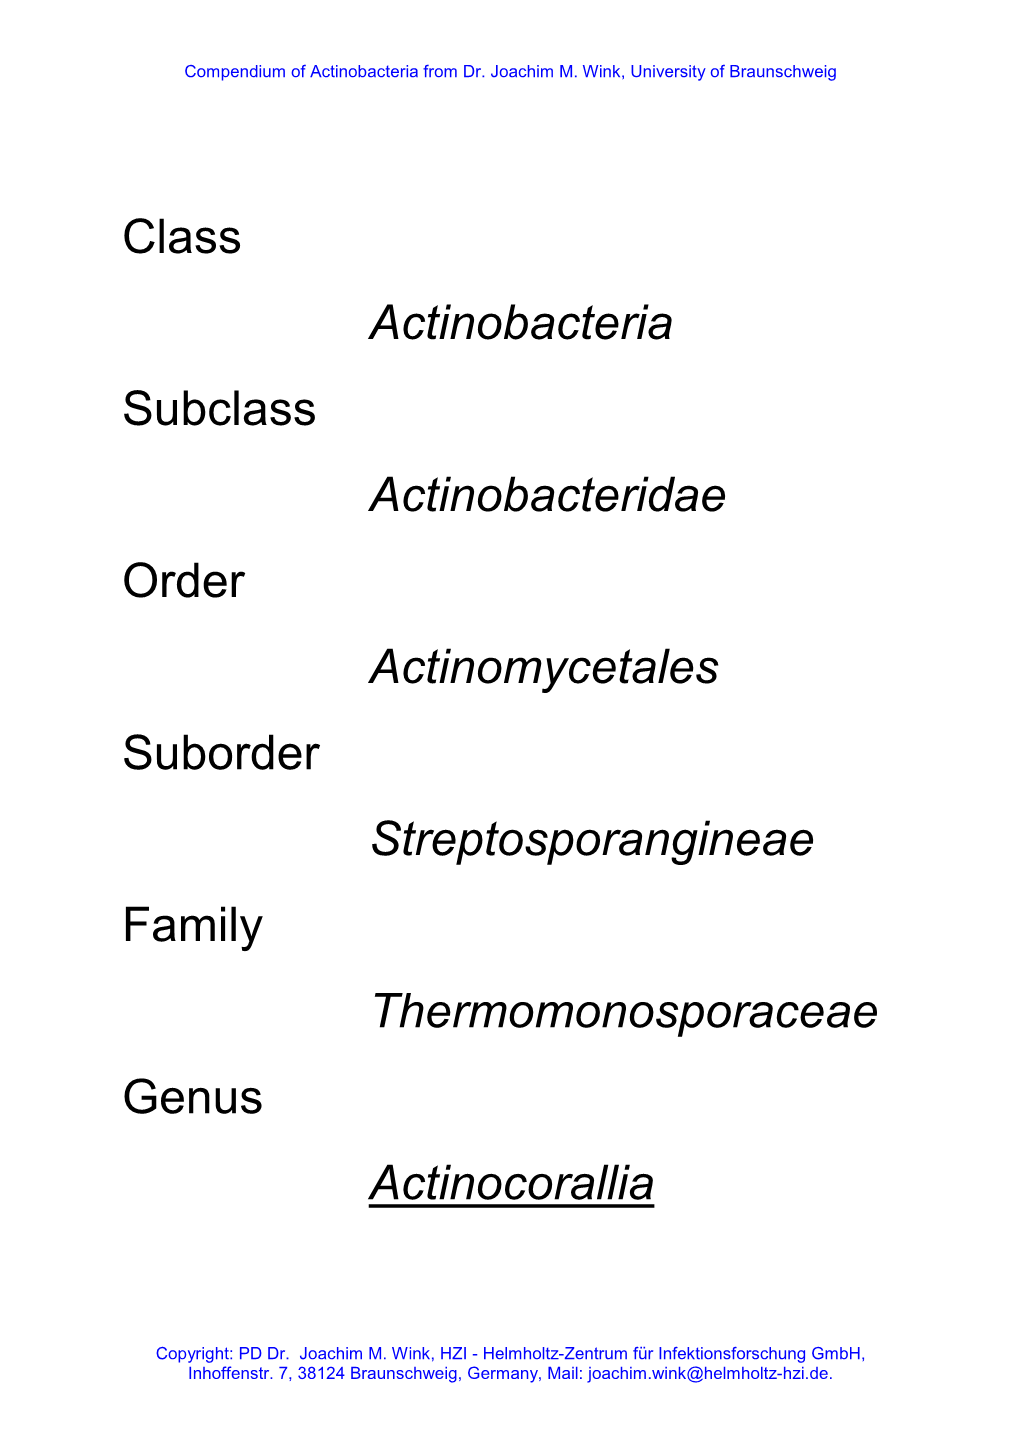 Class Actinobacteria Subclass Actinobacteridae Order Actinomycetales Suborder Streptosporangineae Family Thermomonosporaceae Genus Actinocorallia